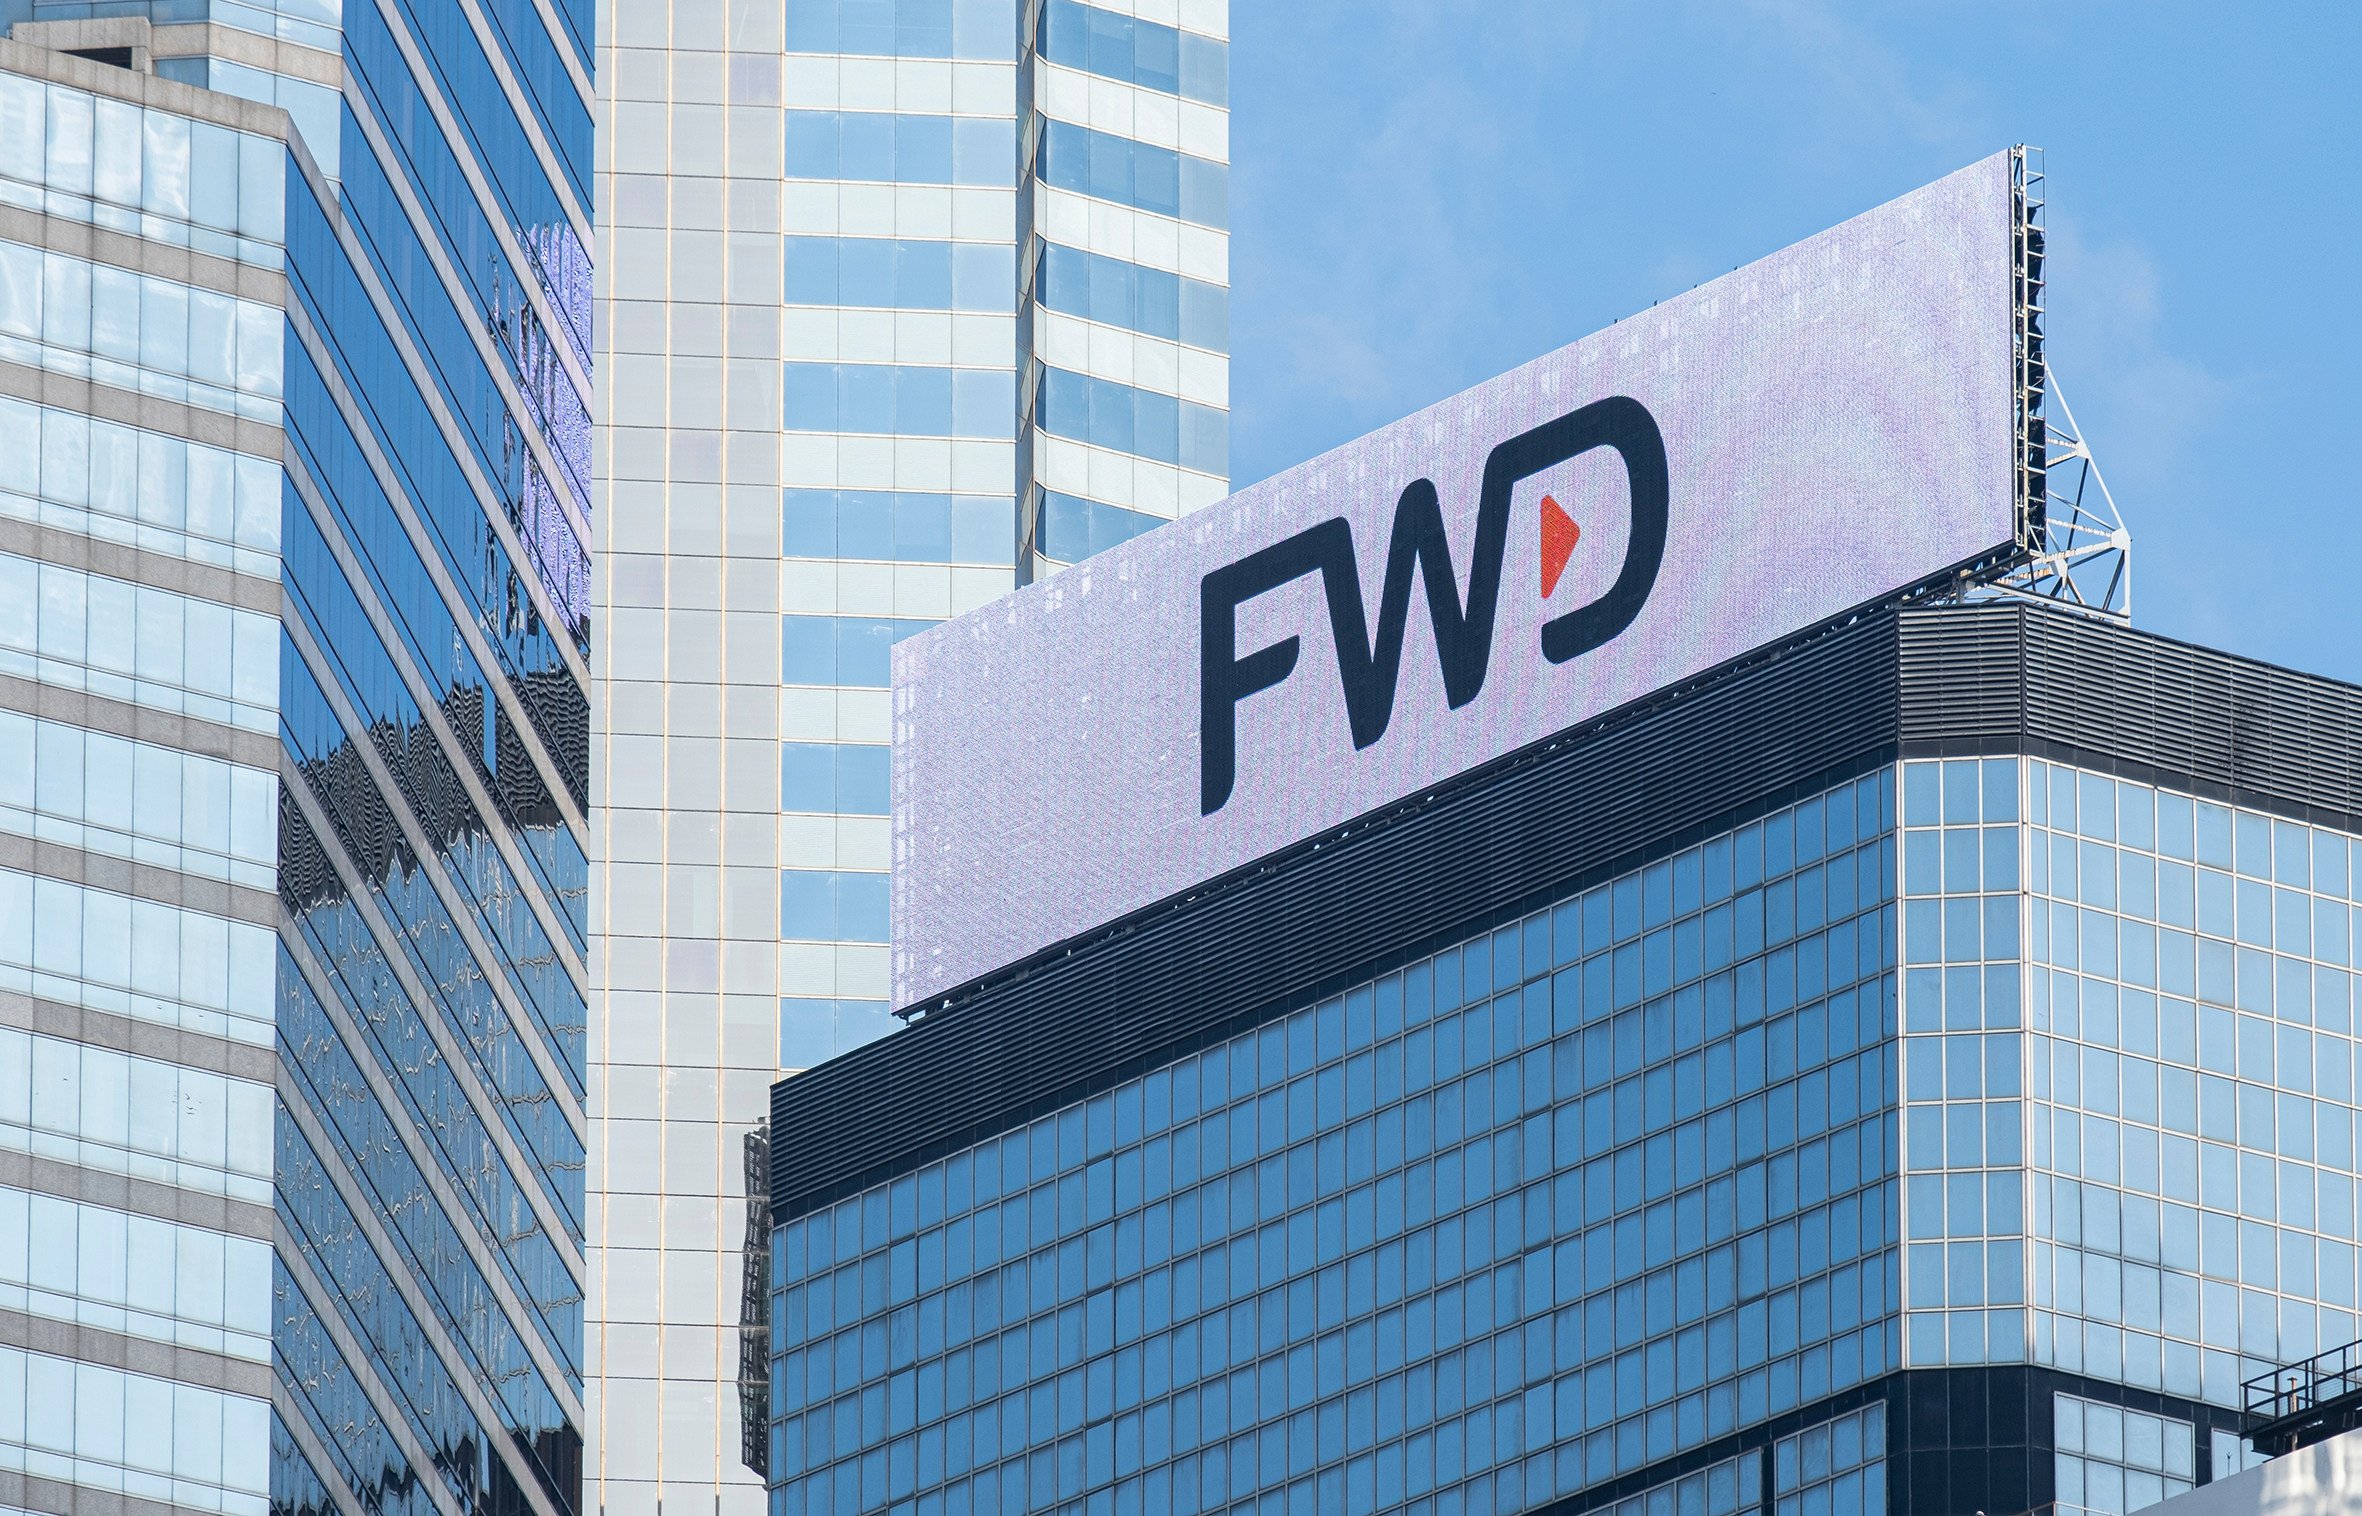 FWD Group is owned by Hong Kong billionaire Richard Li. Photo: Shutterstock